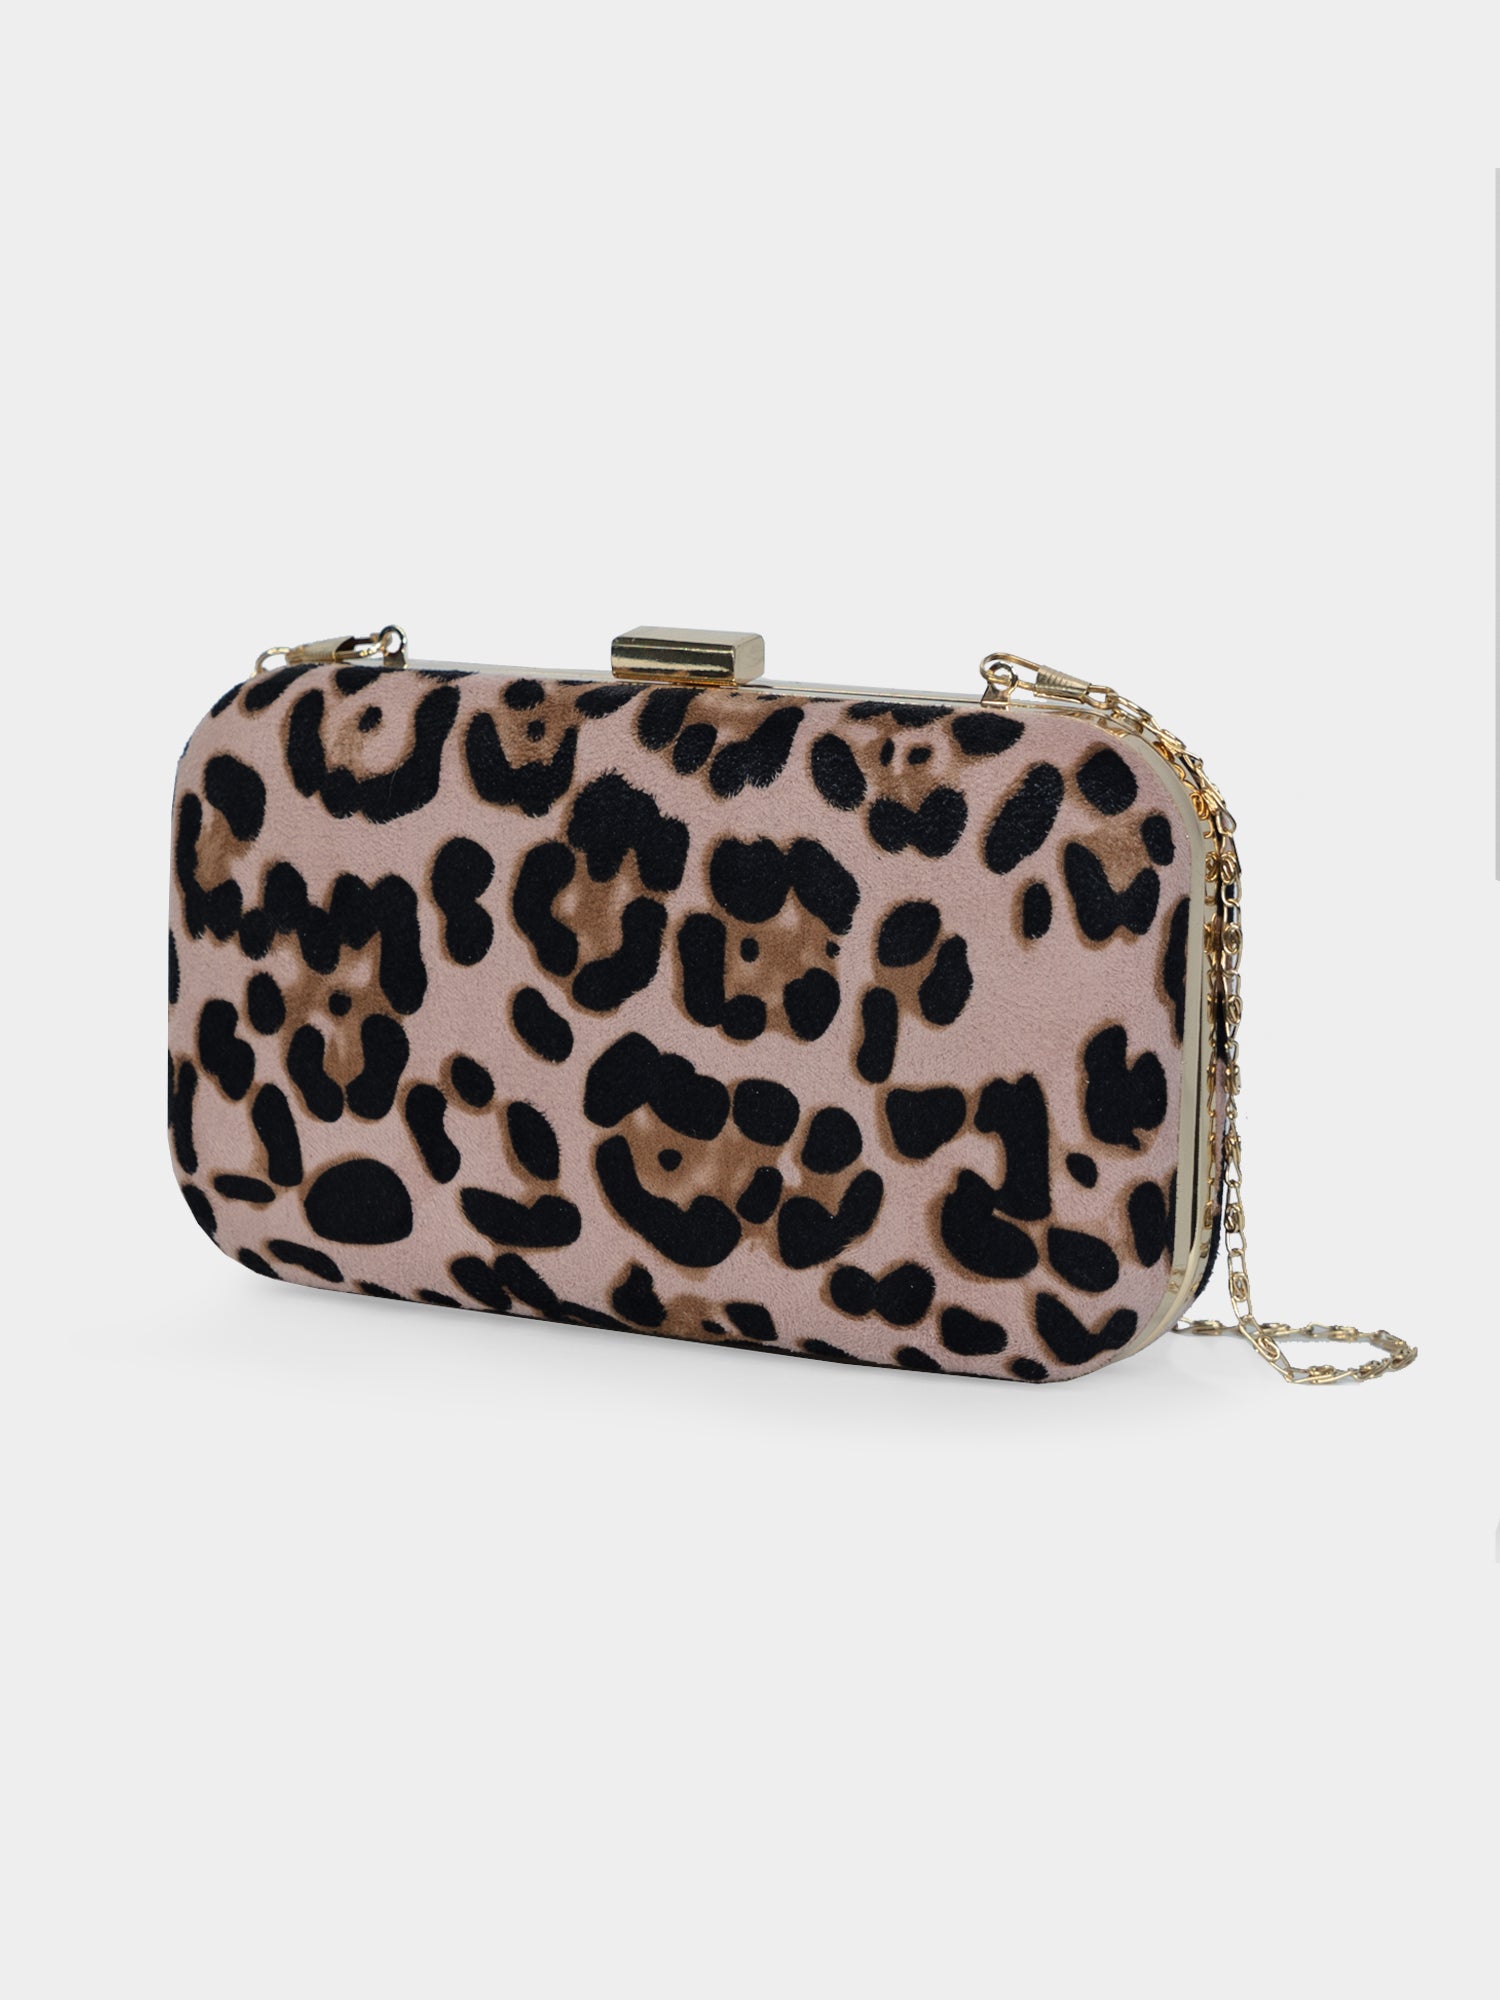 Leopard Cheetah Print Clutch Purse Evening Crossbody Bag - Dark Leopar –  Sophia Collection